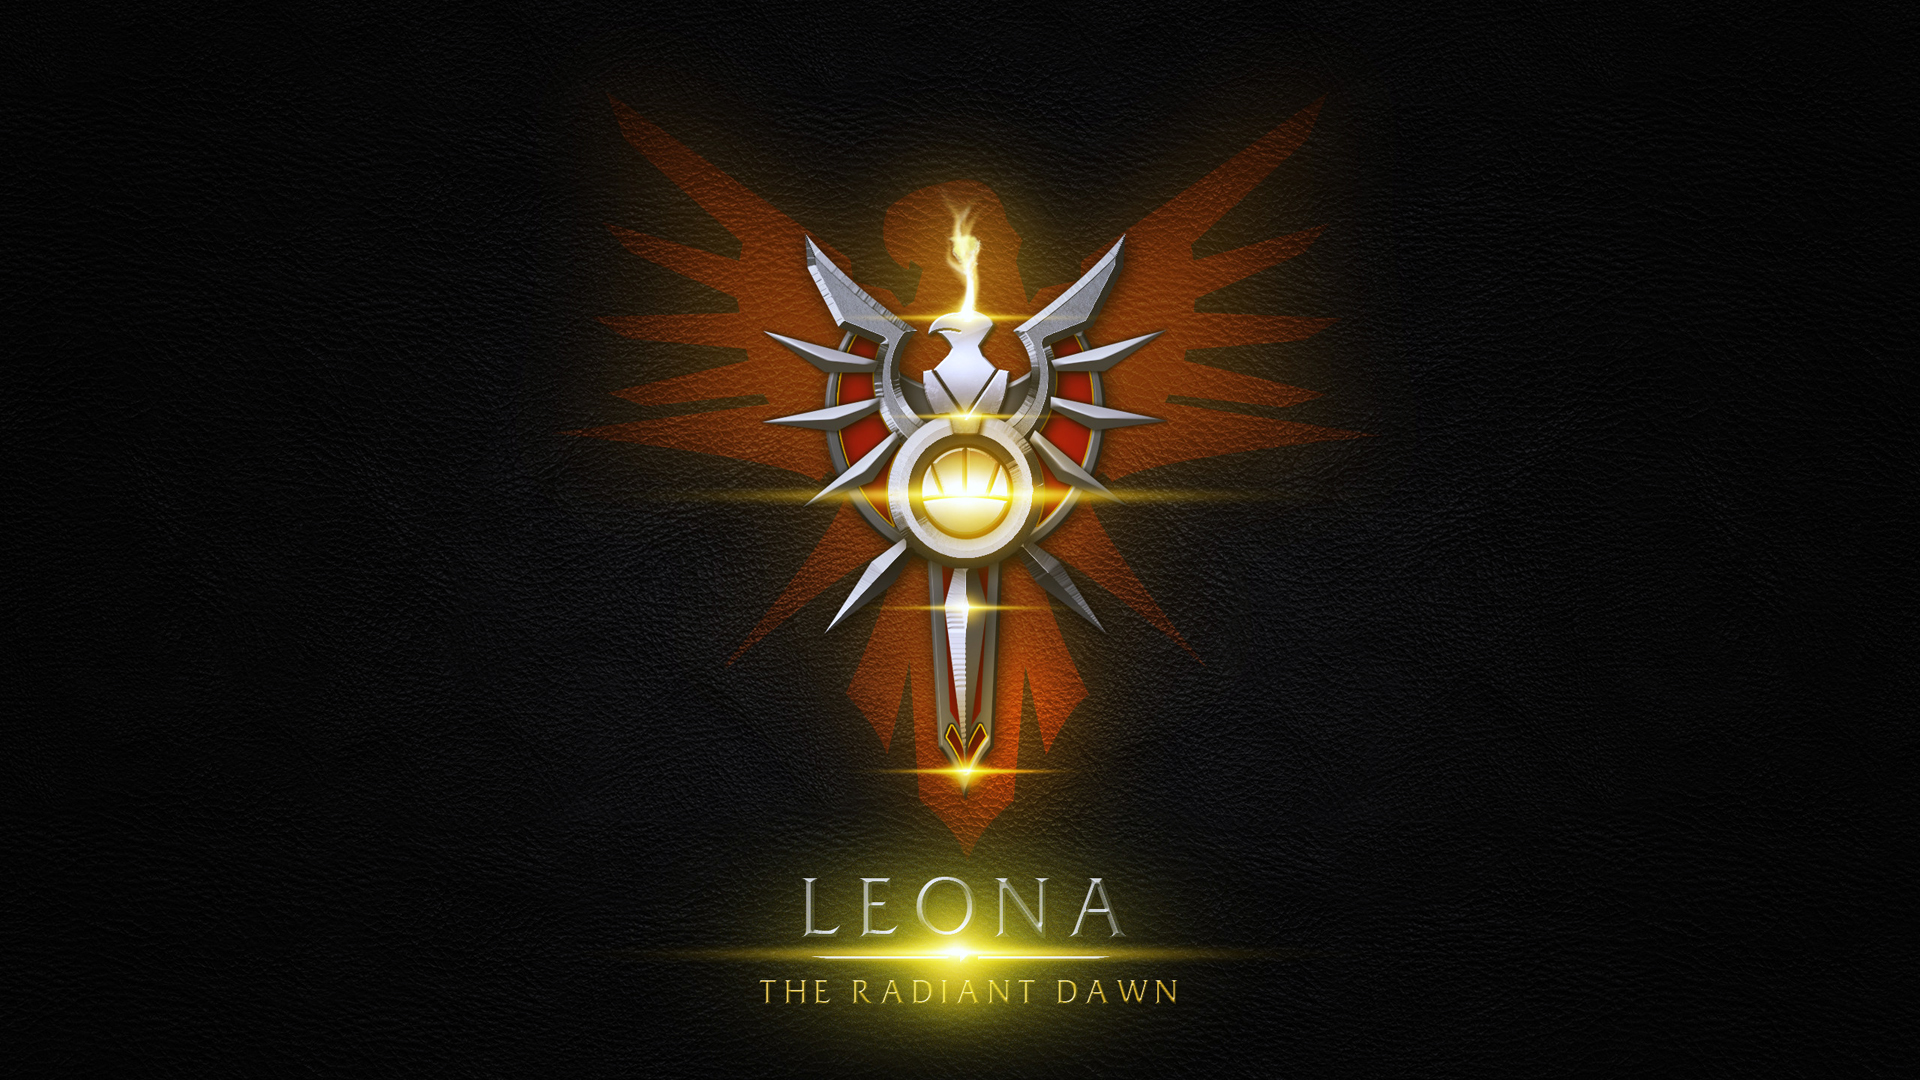 leona logo icon league of legends game lol champion hd 1920x1080 1080p